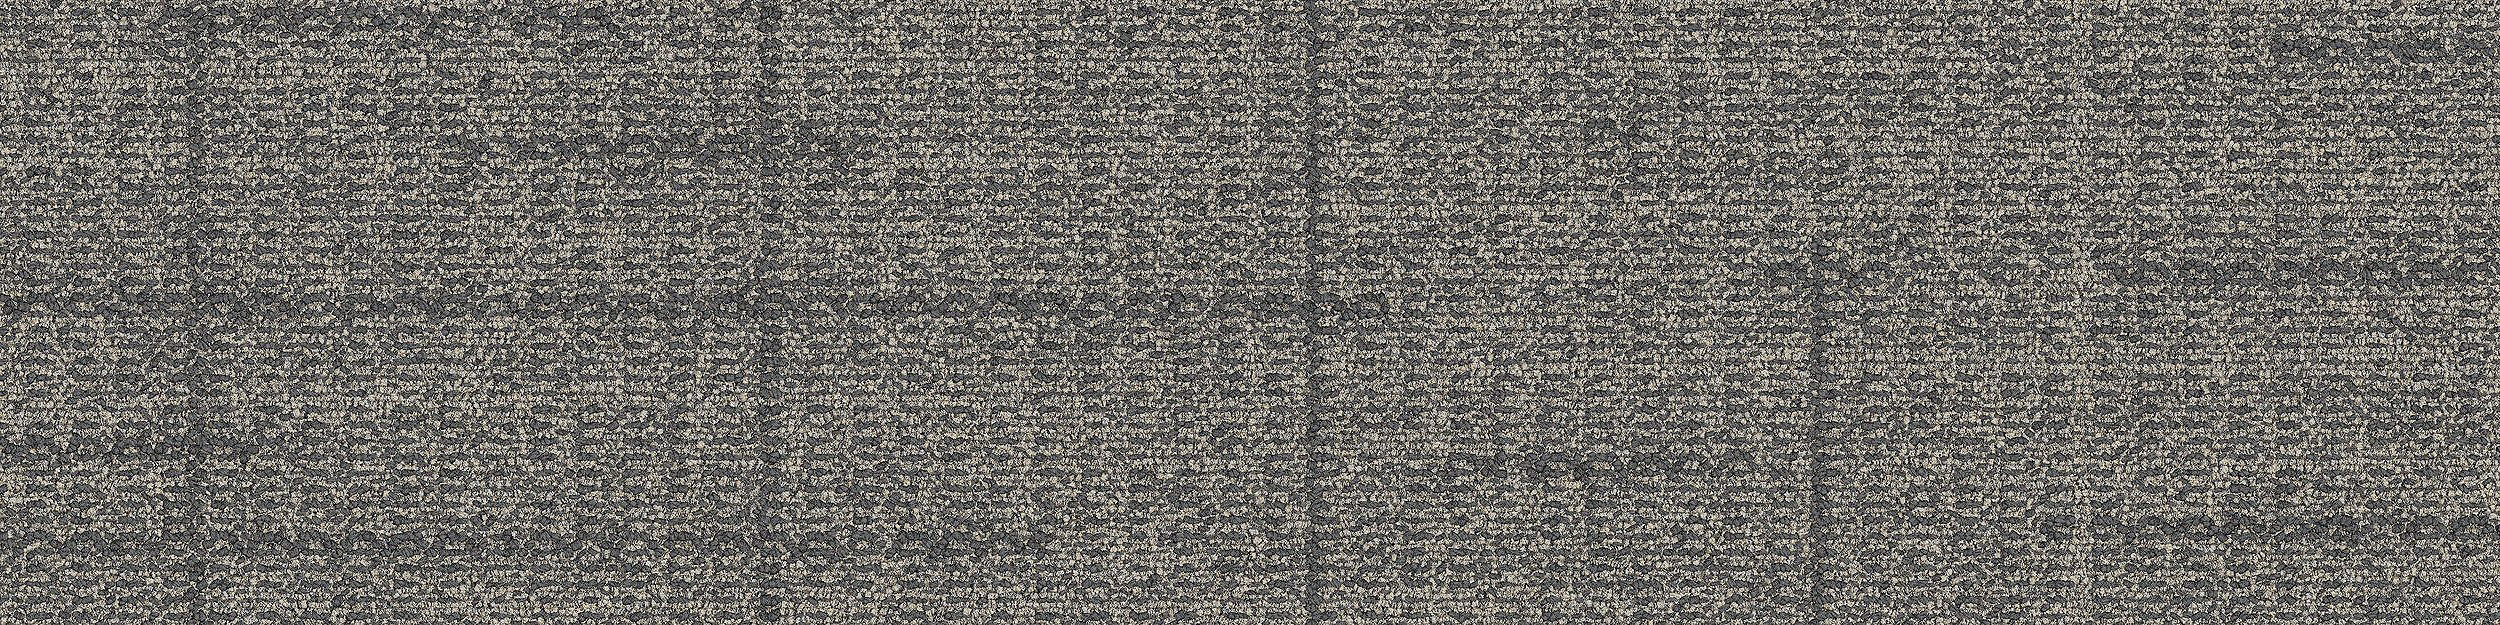 Open Air 401 Carpet Tile In Nickel image number 7